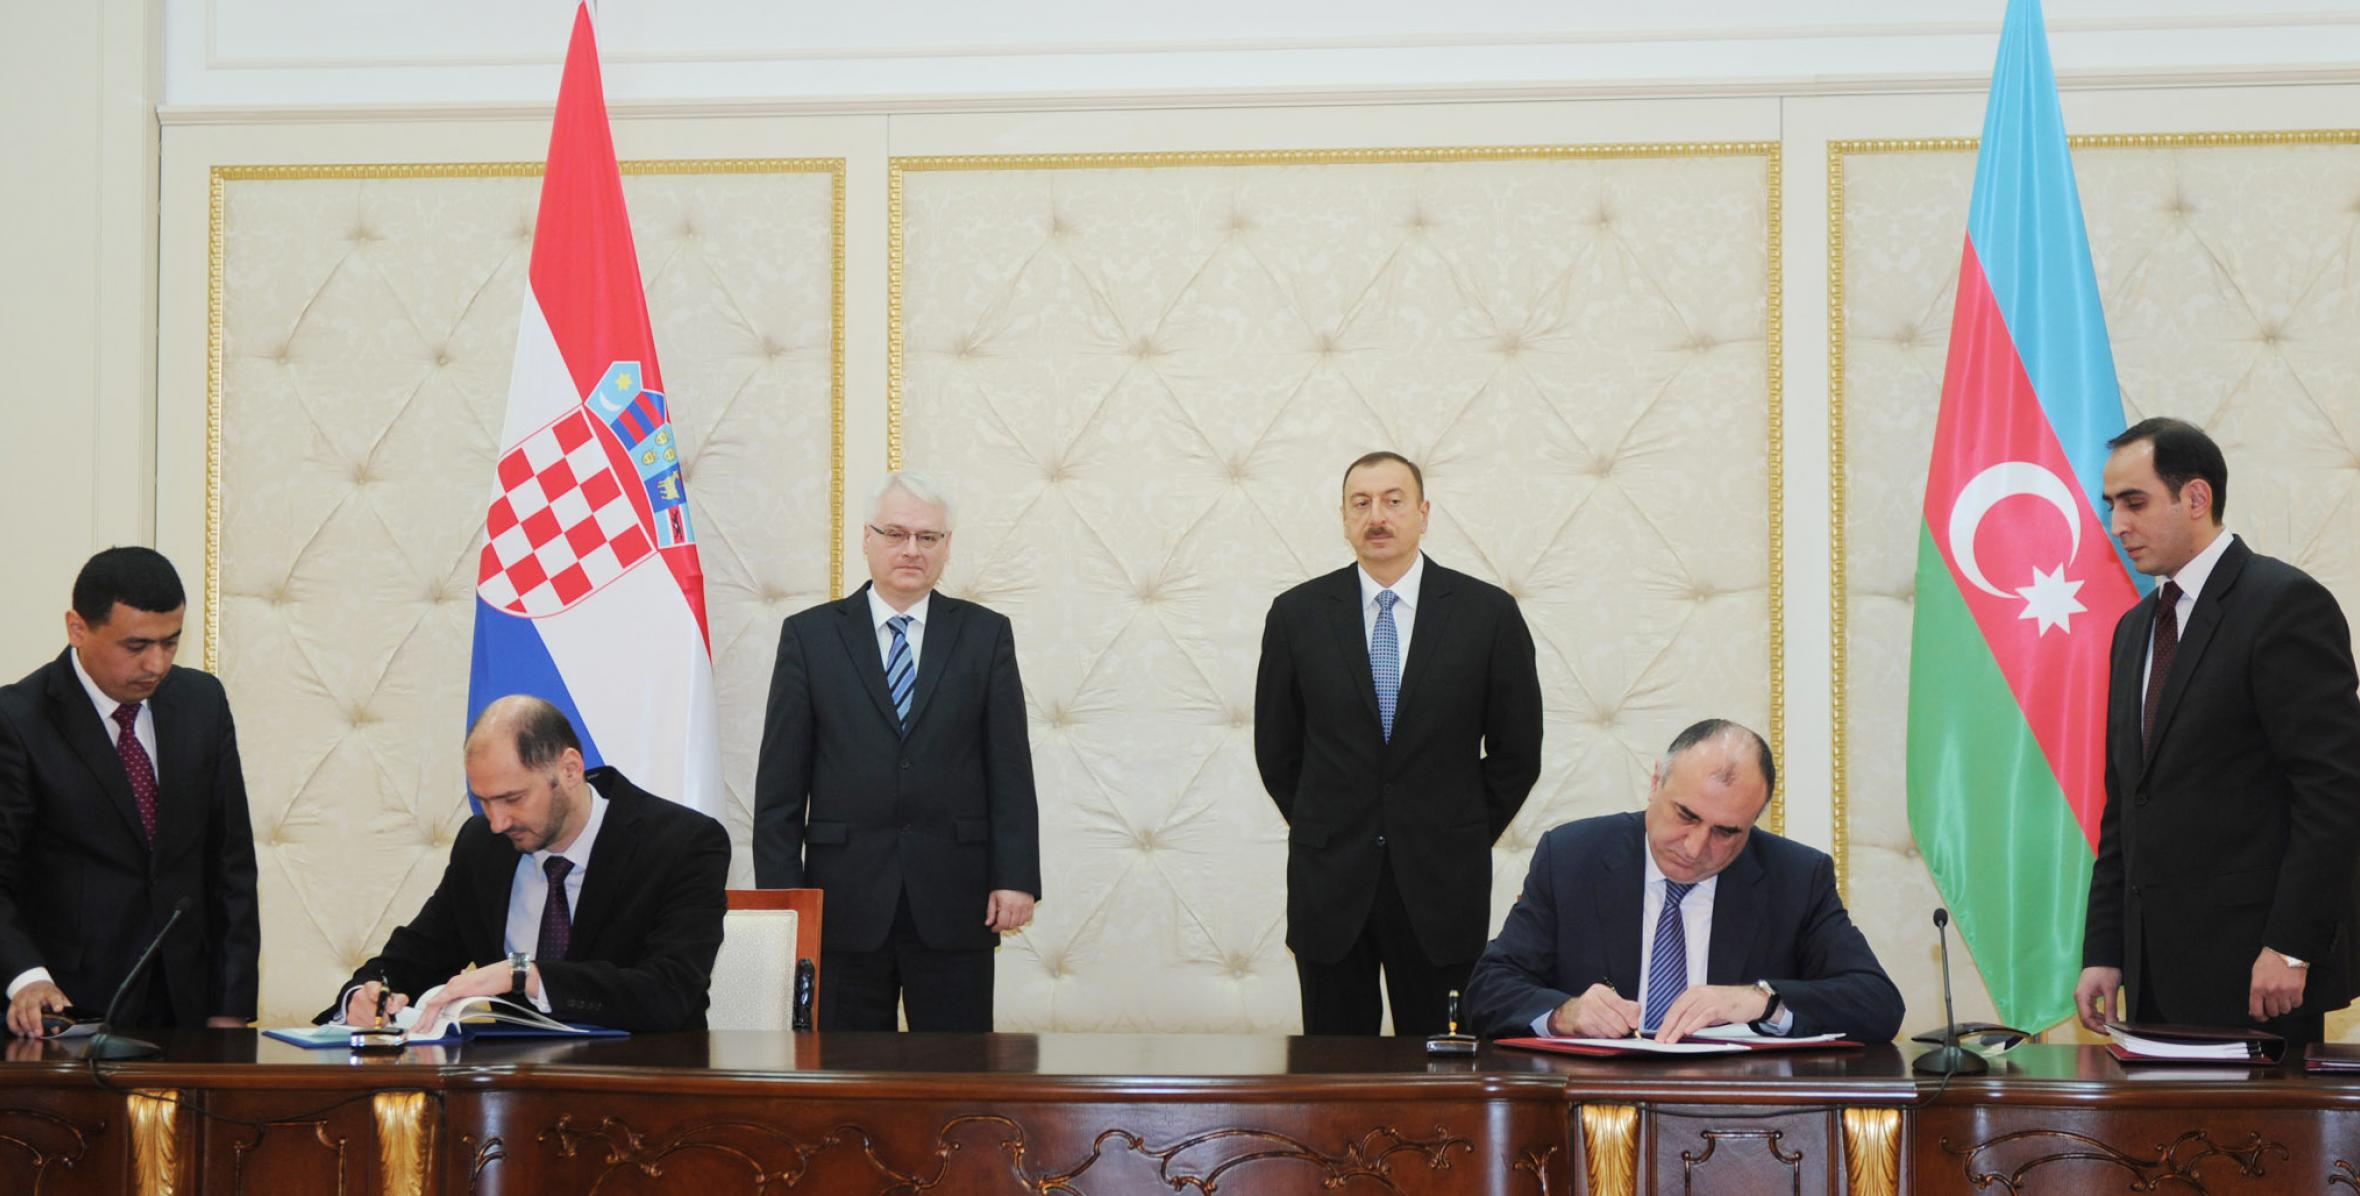 Signing ceremony of Azerbaijani-Croatian documents was held